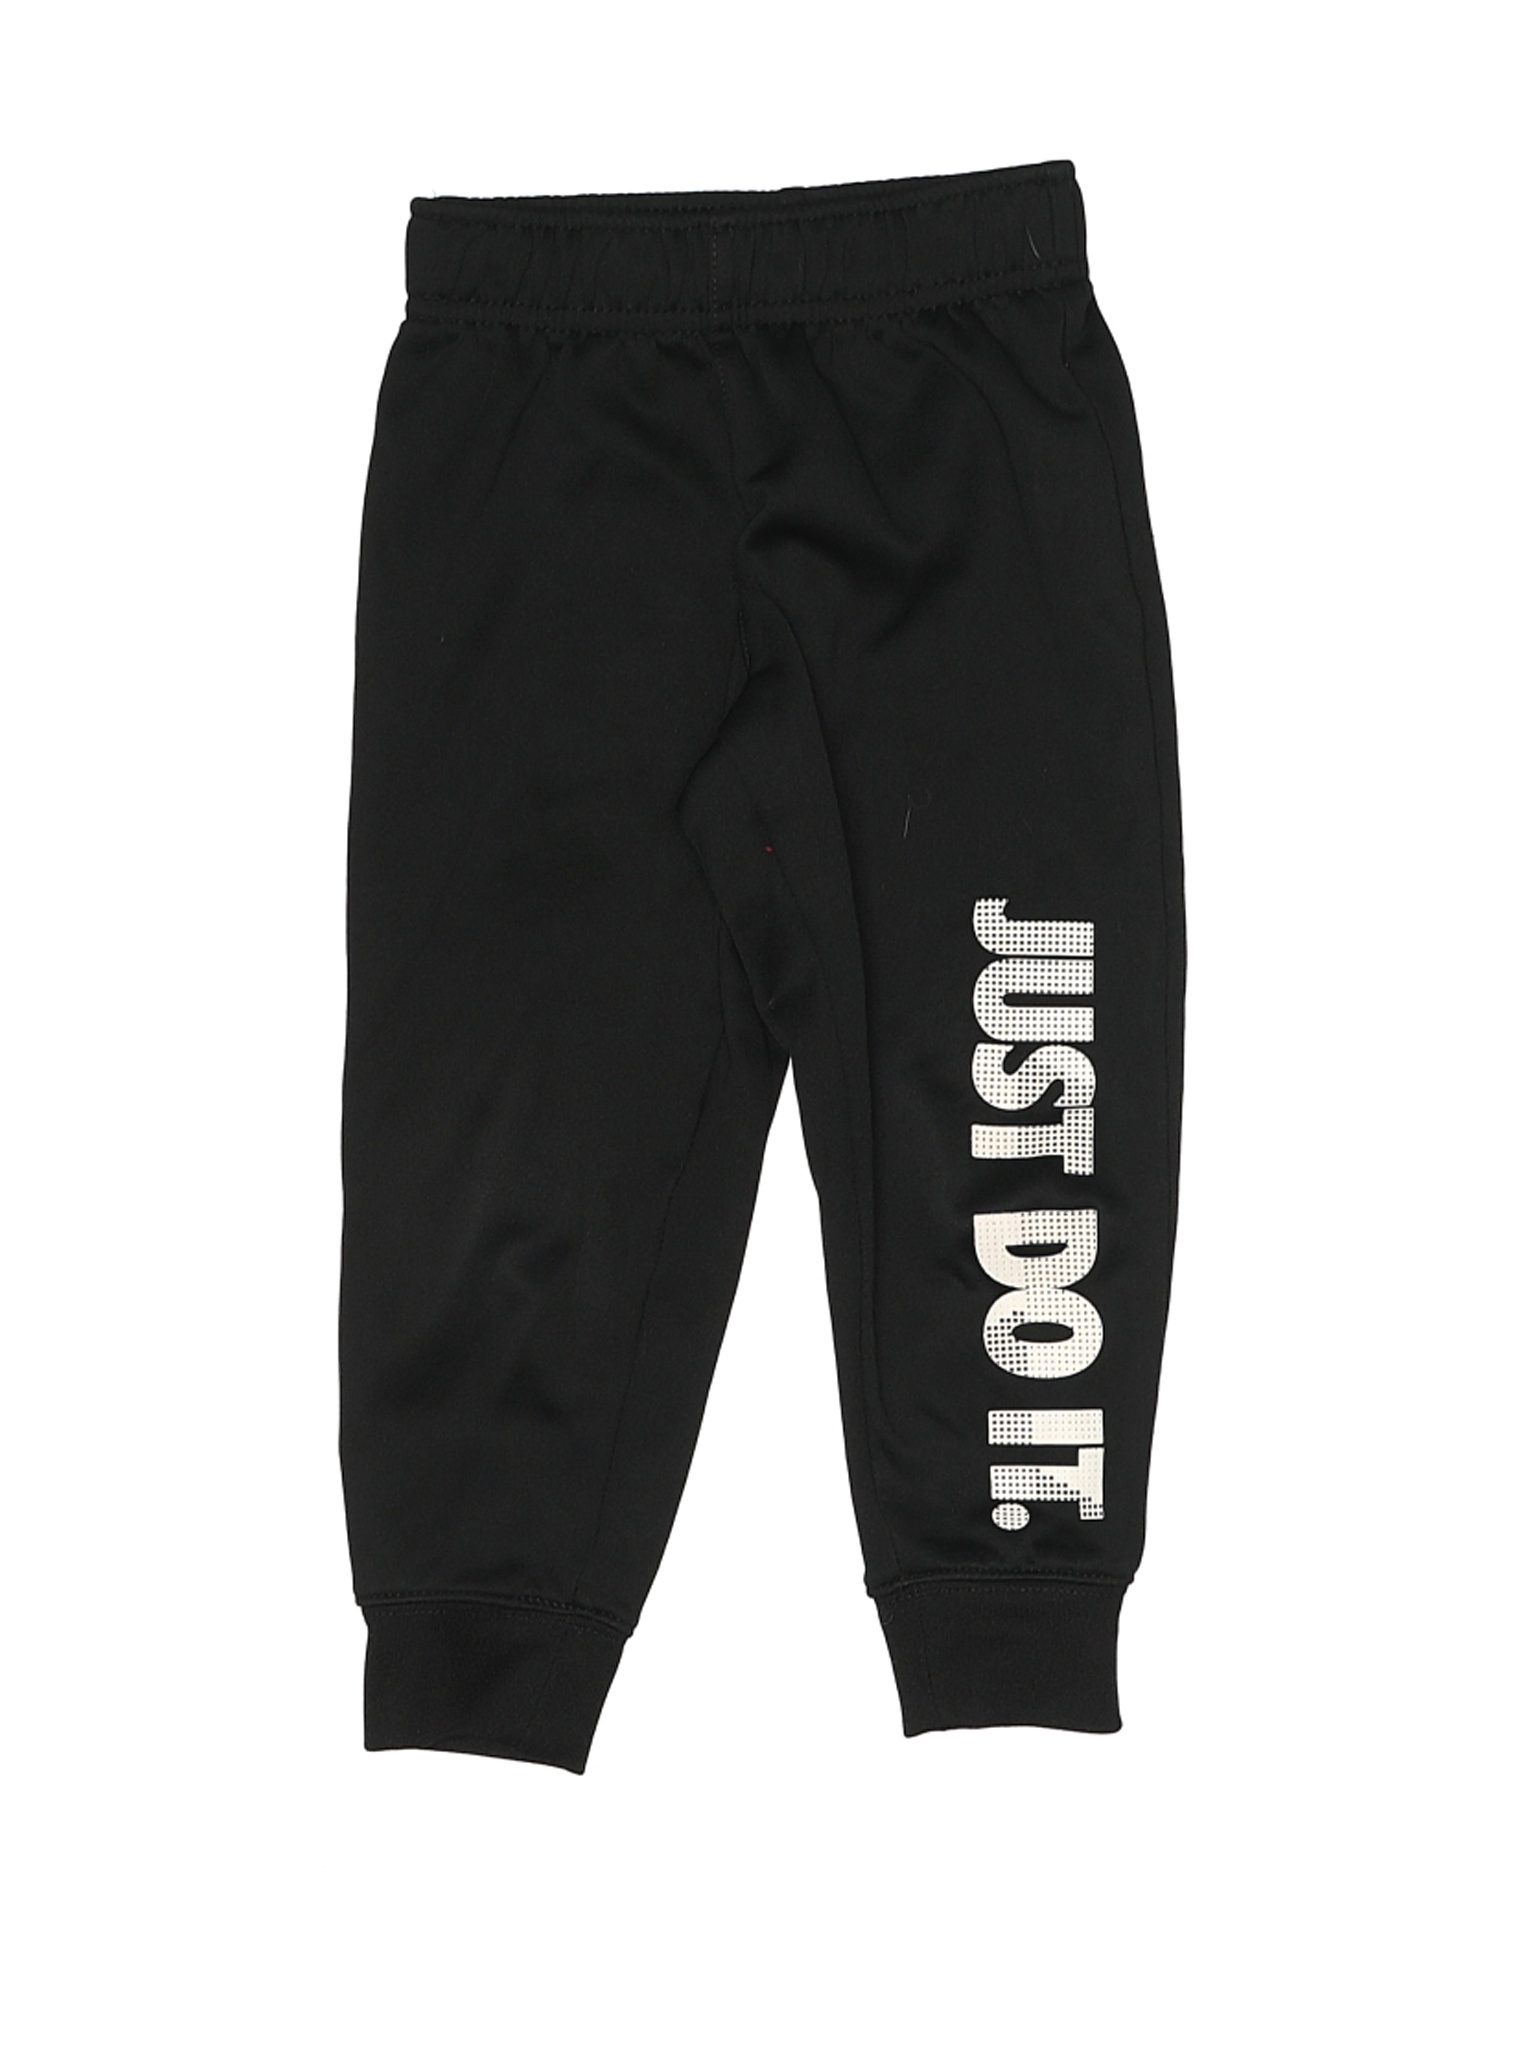 Nike Boys Black Sweatpants 3T | eBay